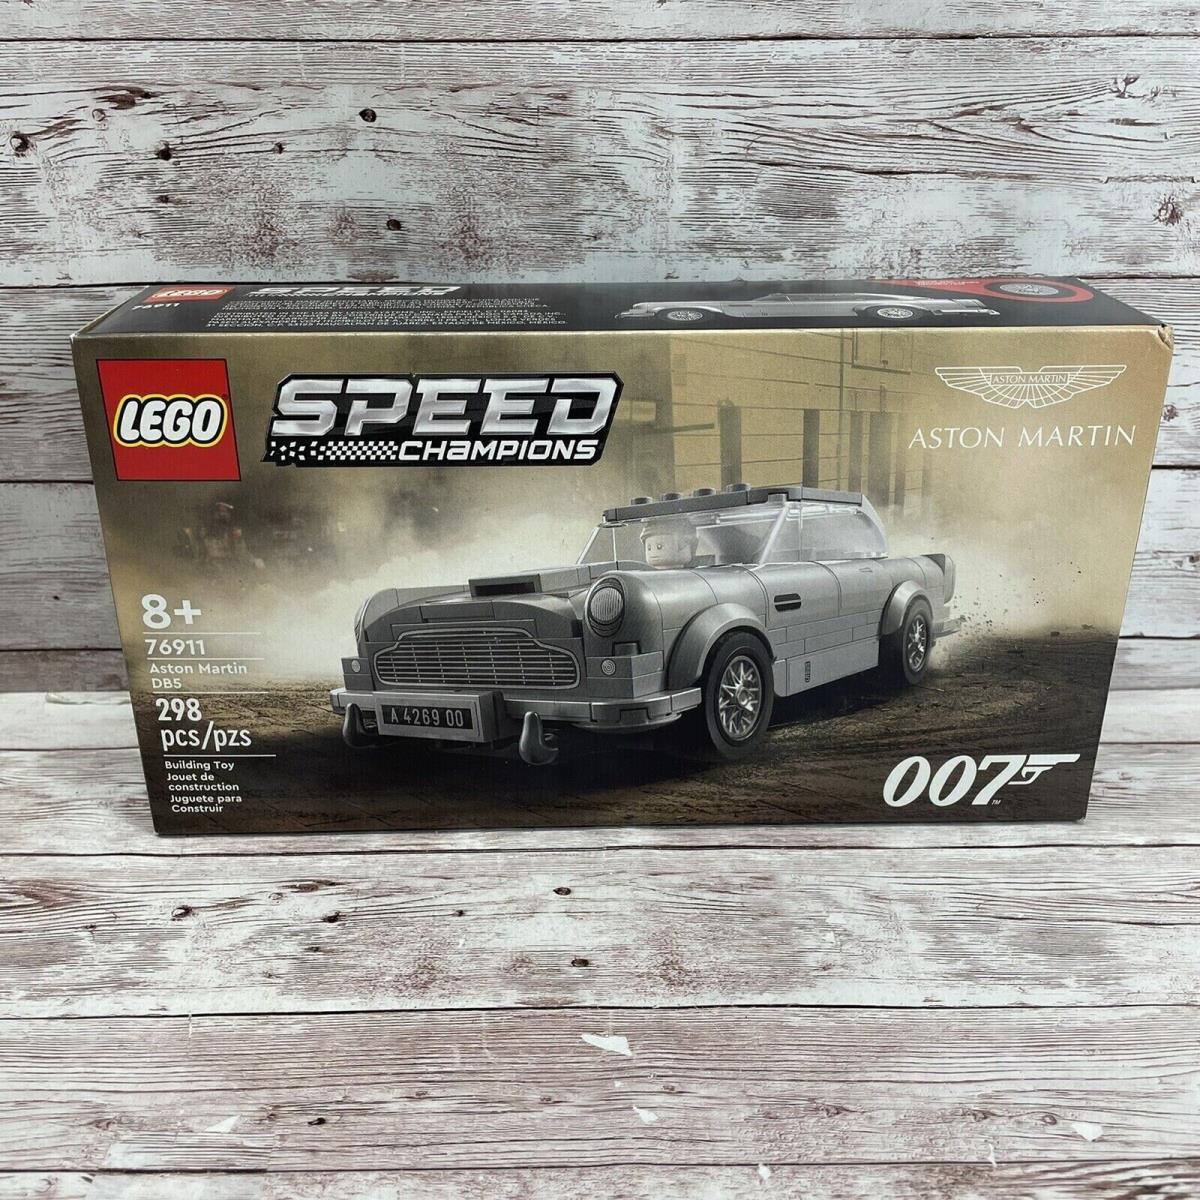 Lego Speed Champions 007 Aston Martin DB5 76911 298 Pieces James Bond